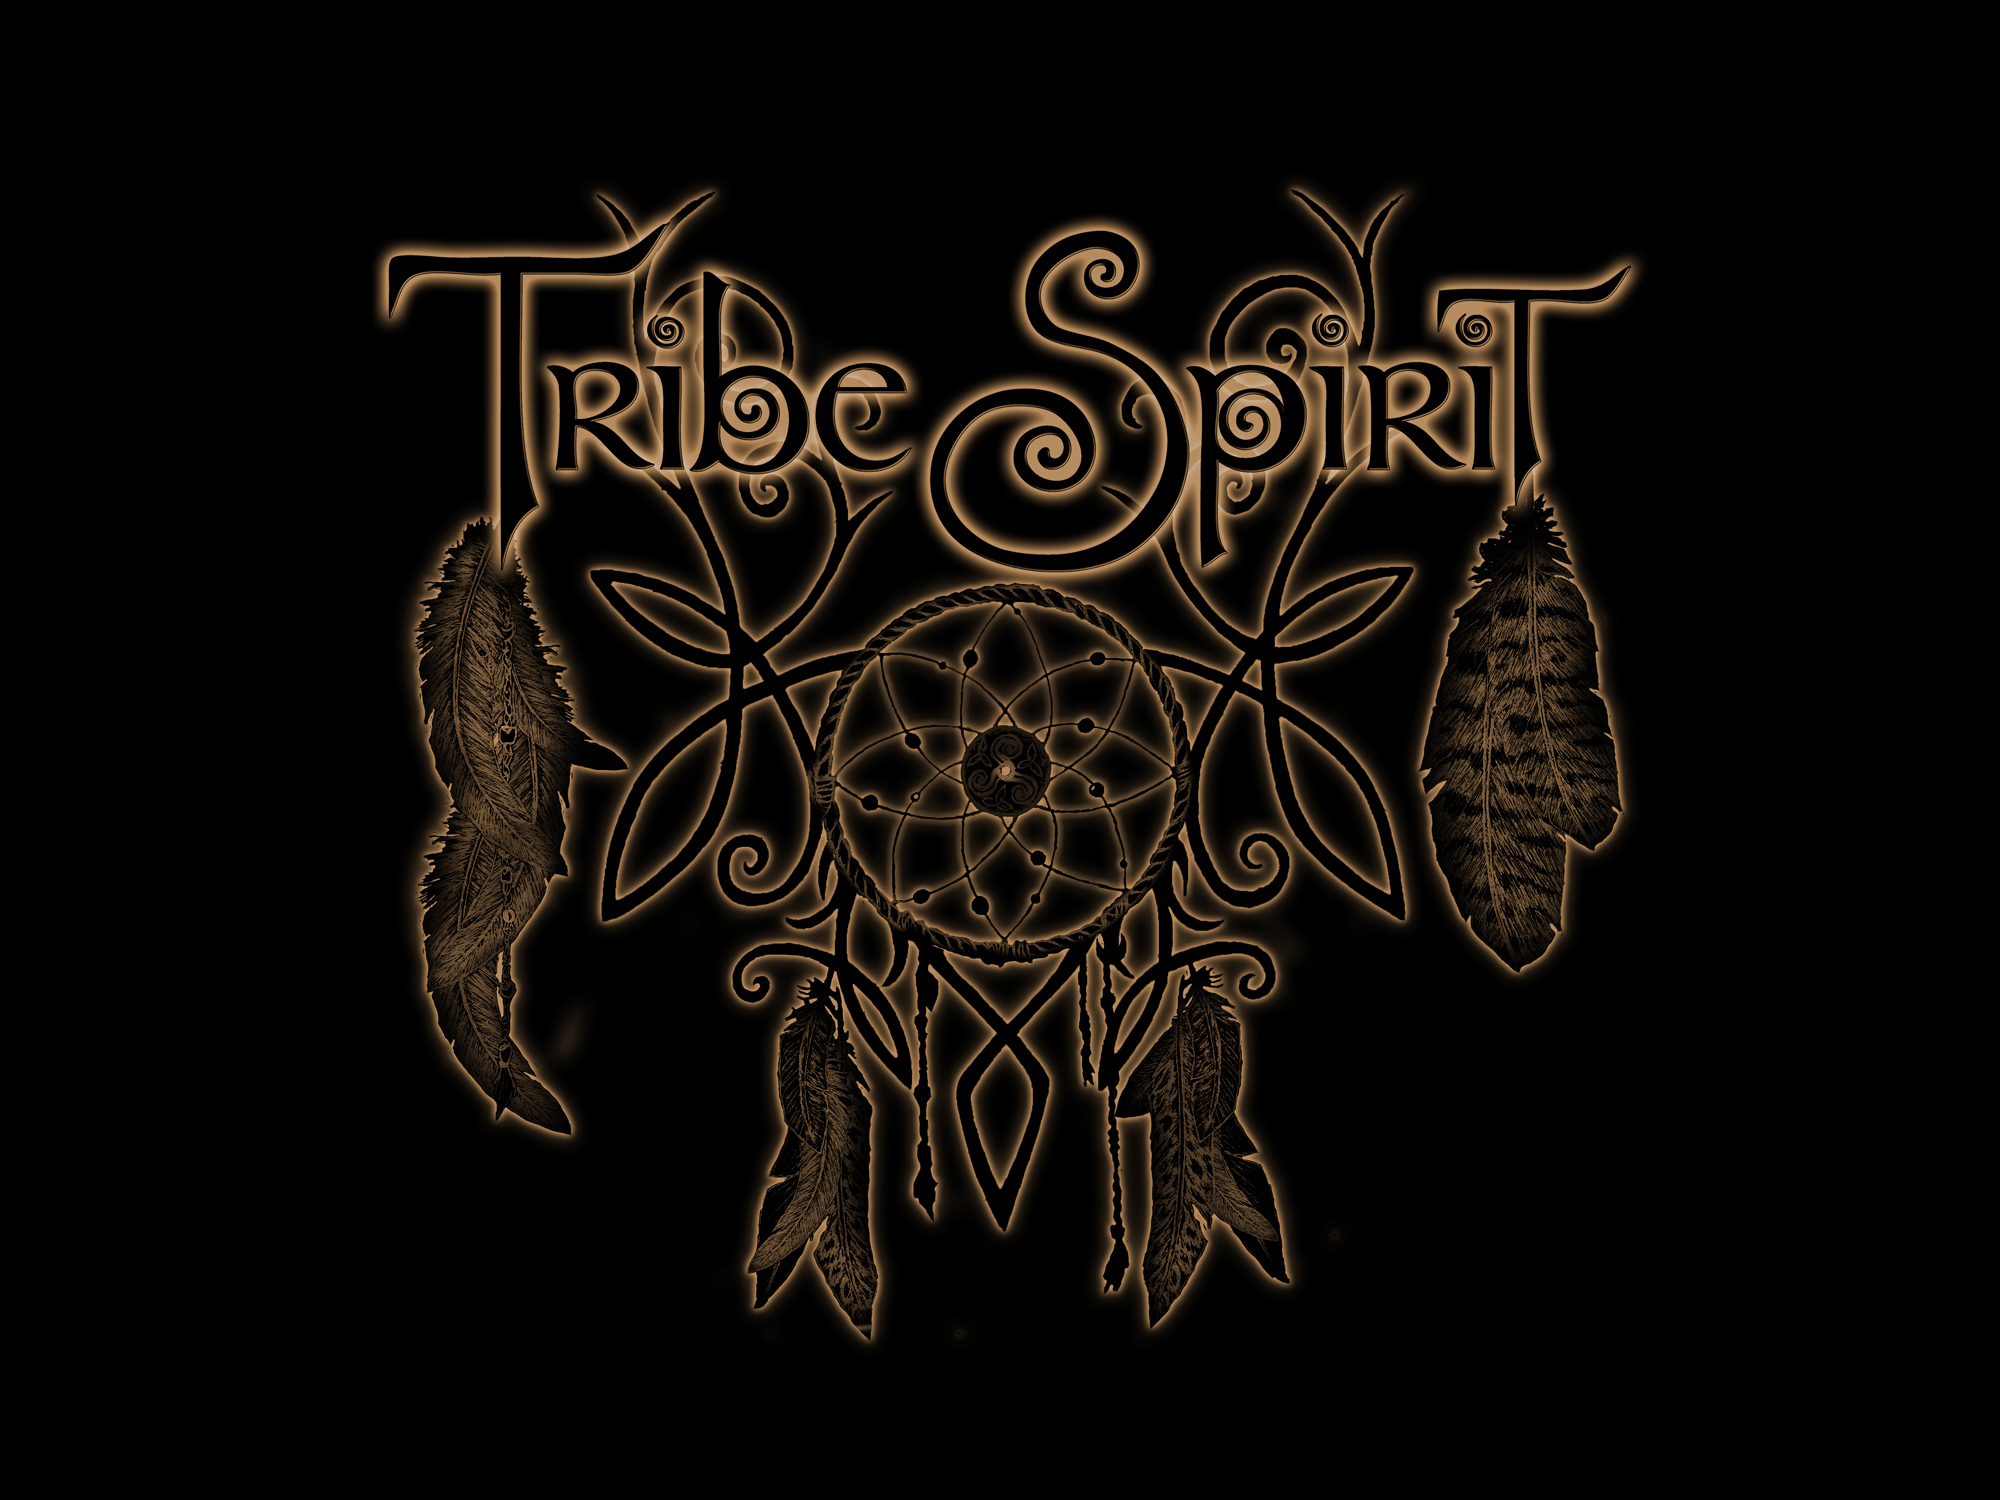 Tribe Spirit Tribespirit